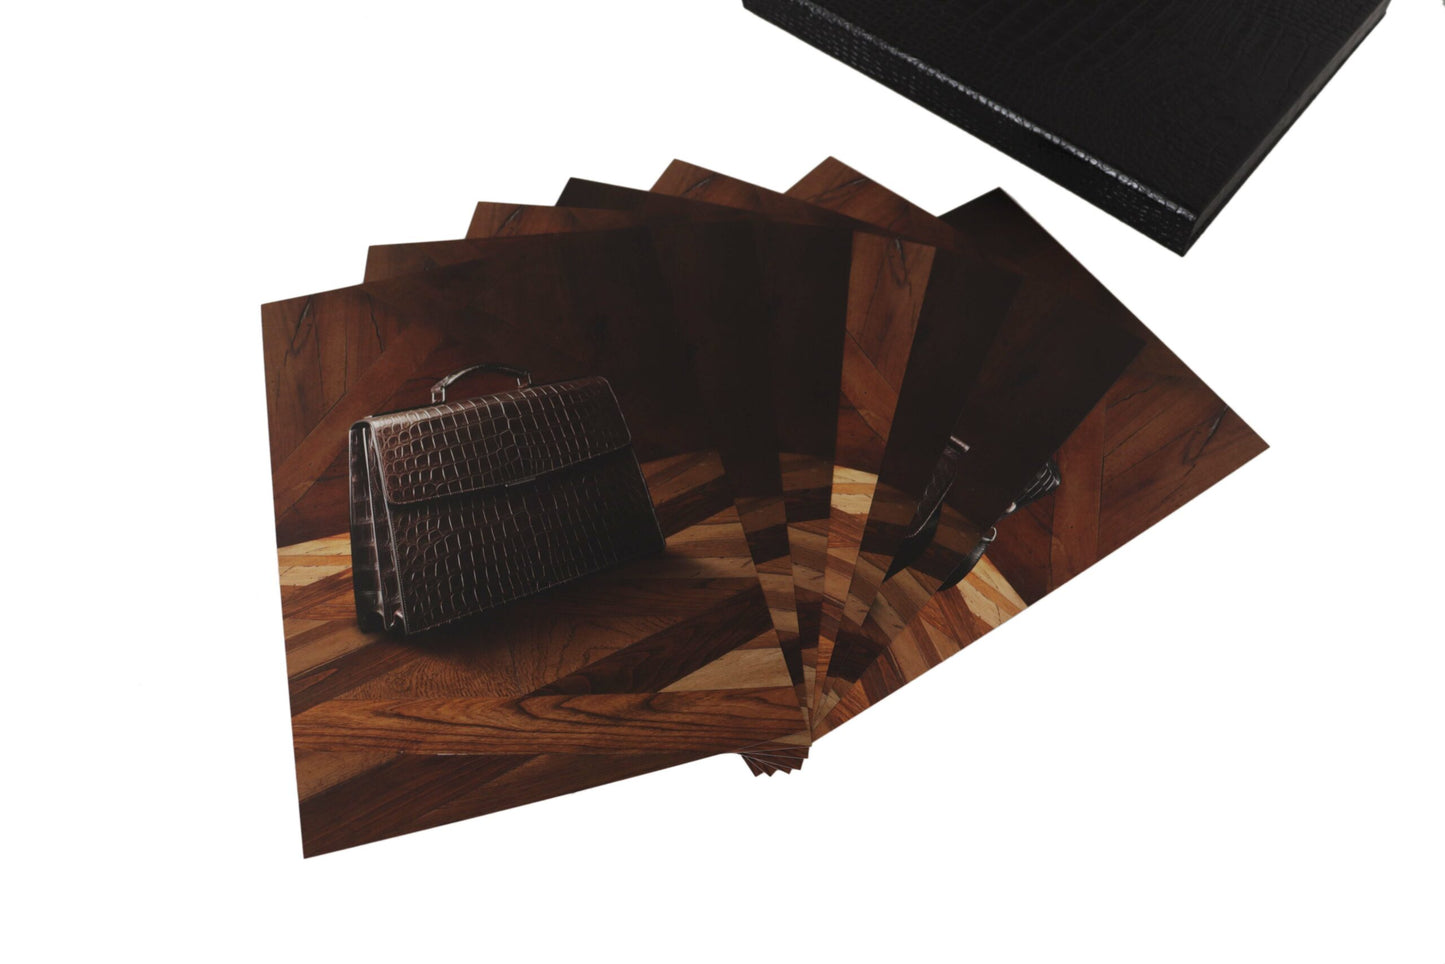 Dolce & Gabbana Elegant Black Leather Catalogue Case